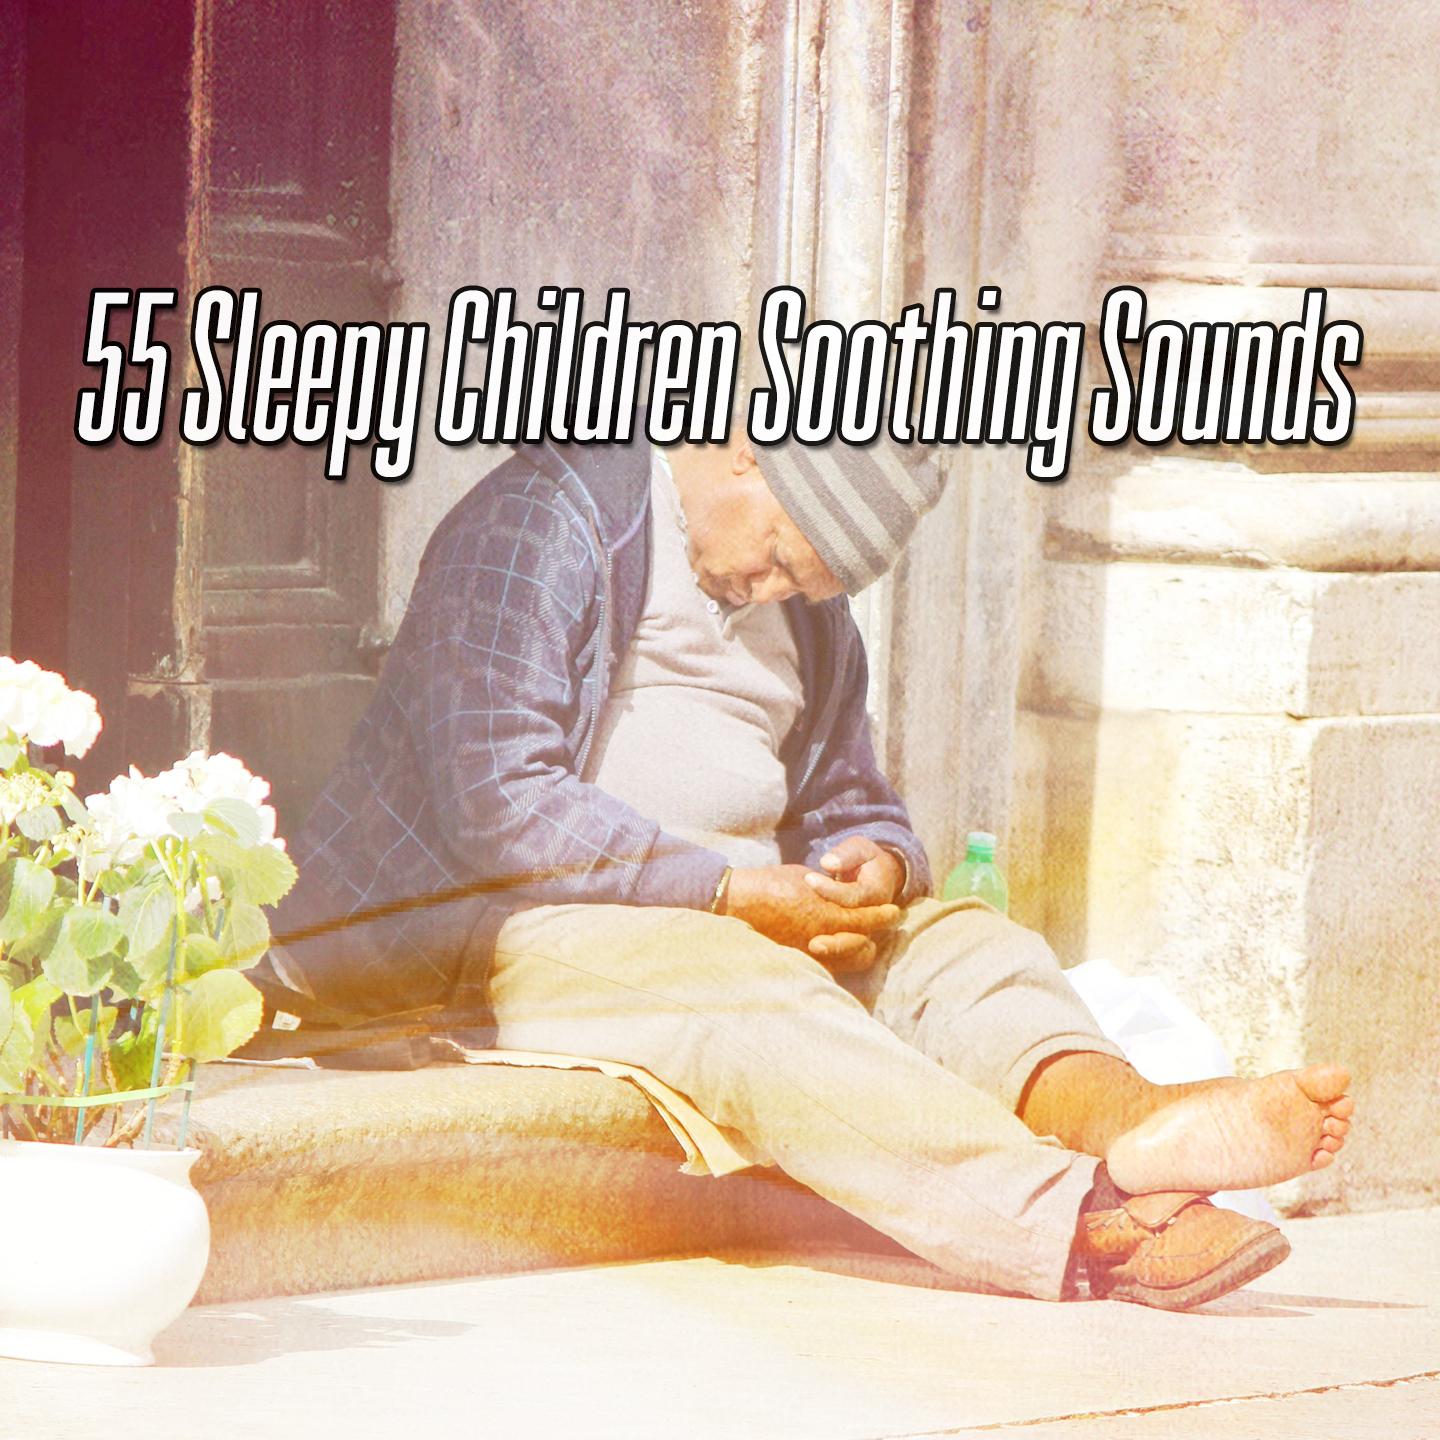 55 Sleepy Children Soothing Sounds